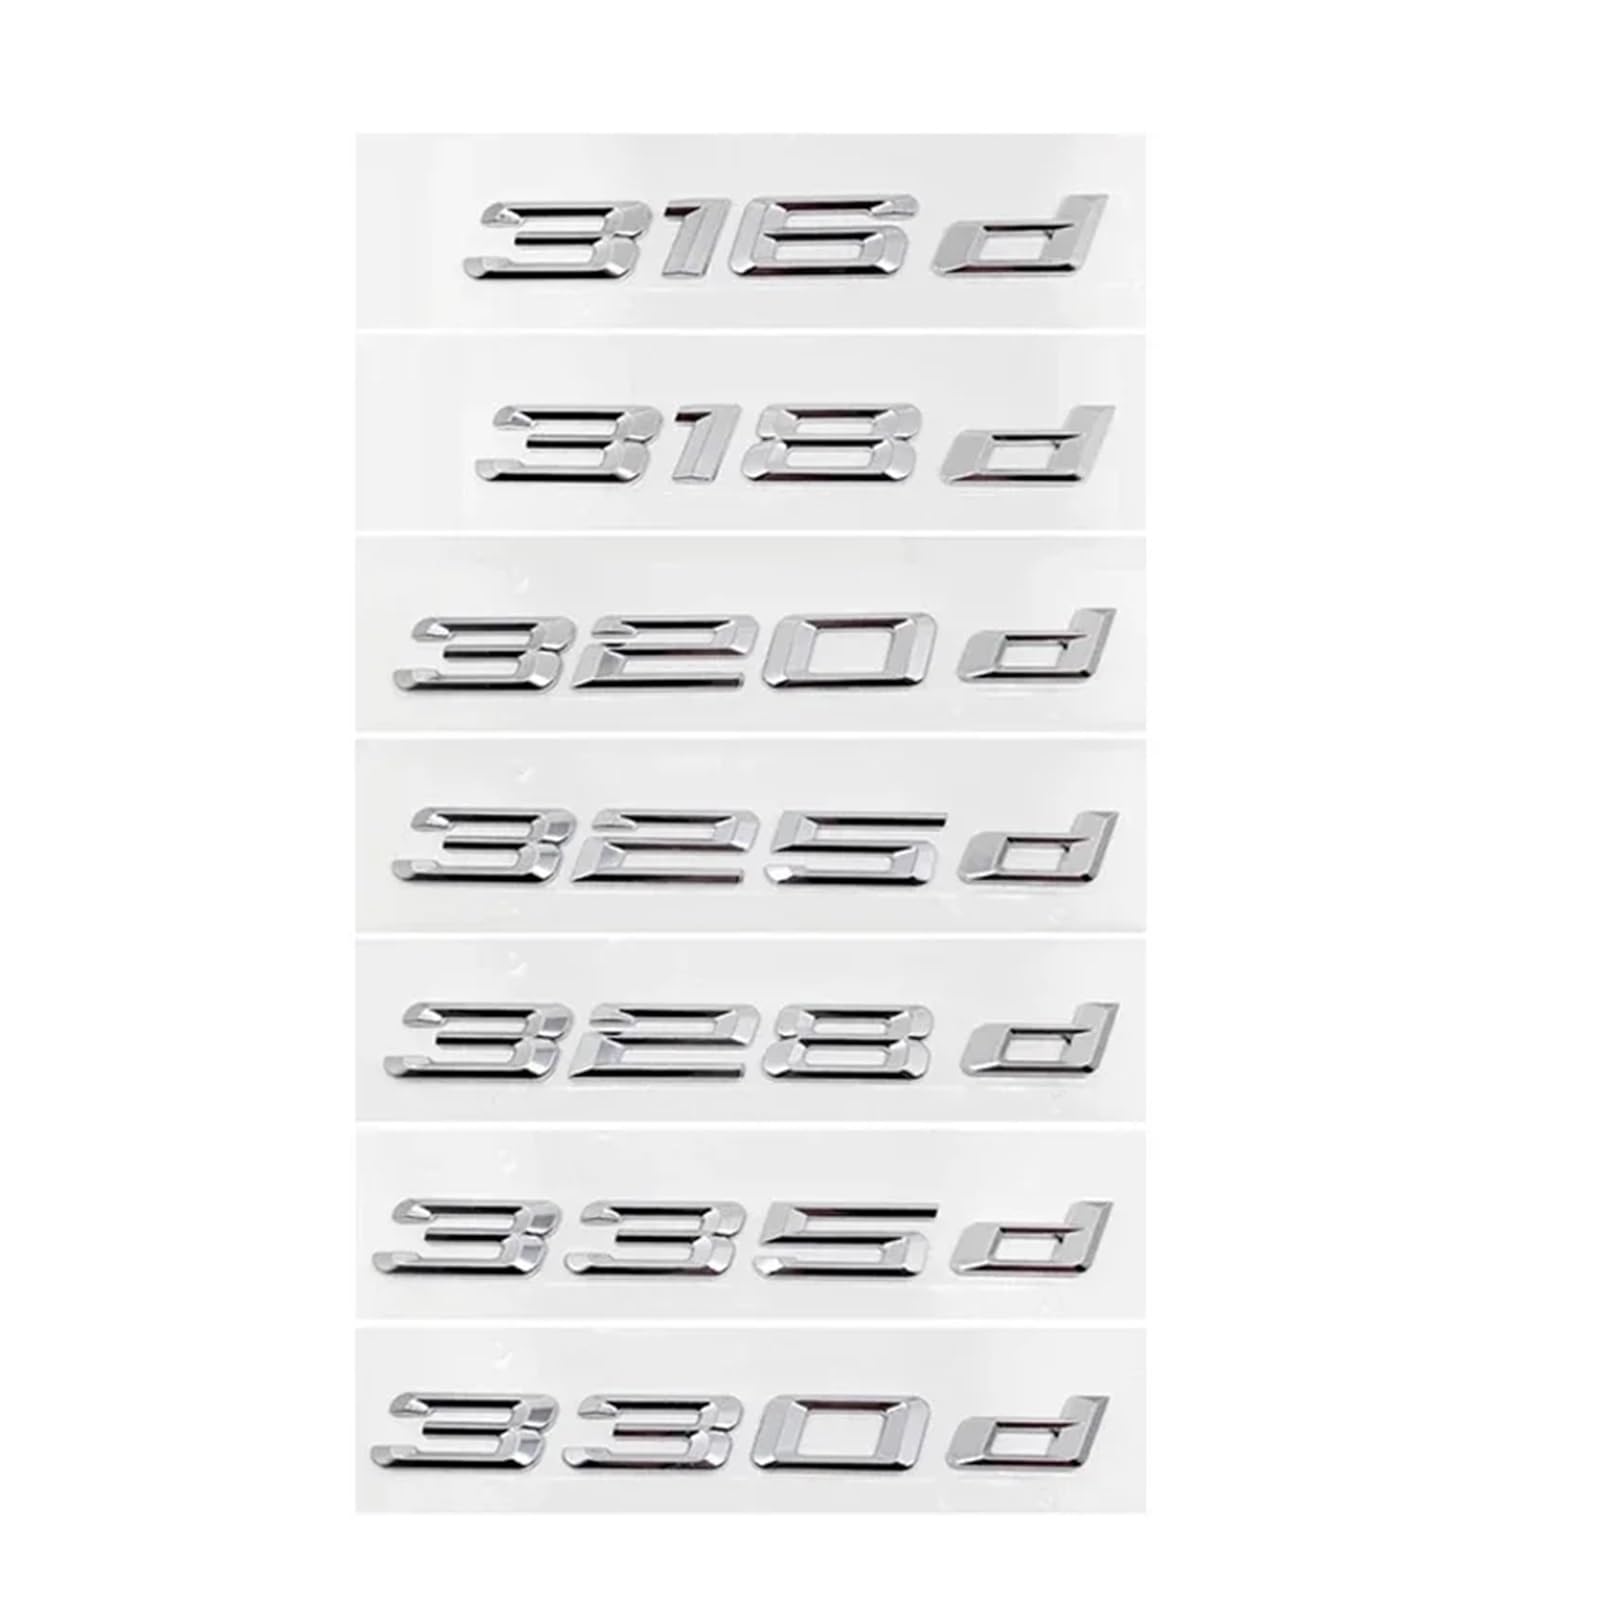 AQXYWQOL 3D-Chrom-Auto-Buchstaben-Emblem-Abzeichen-Aufkleber for den hinteren Kofferraum, kompatibel mit E90 E46 F30 F31 E36 316d 318d 325d 328d 330d 320d Logo-Zubehör Farbe ist konstant, verblasst ni von AQXYWQOL